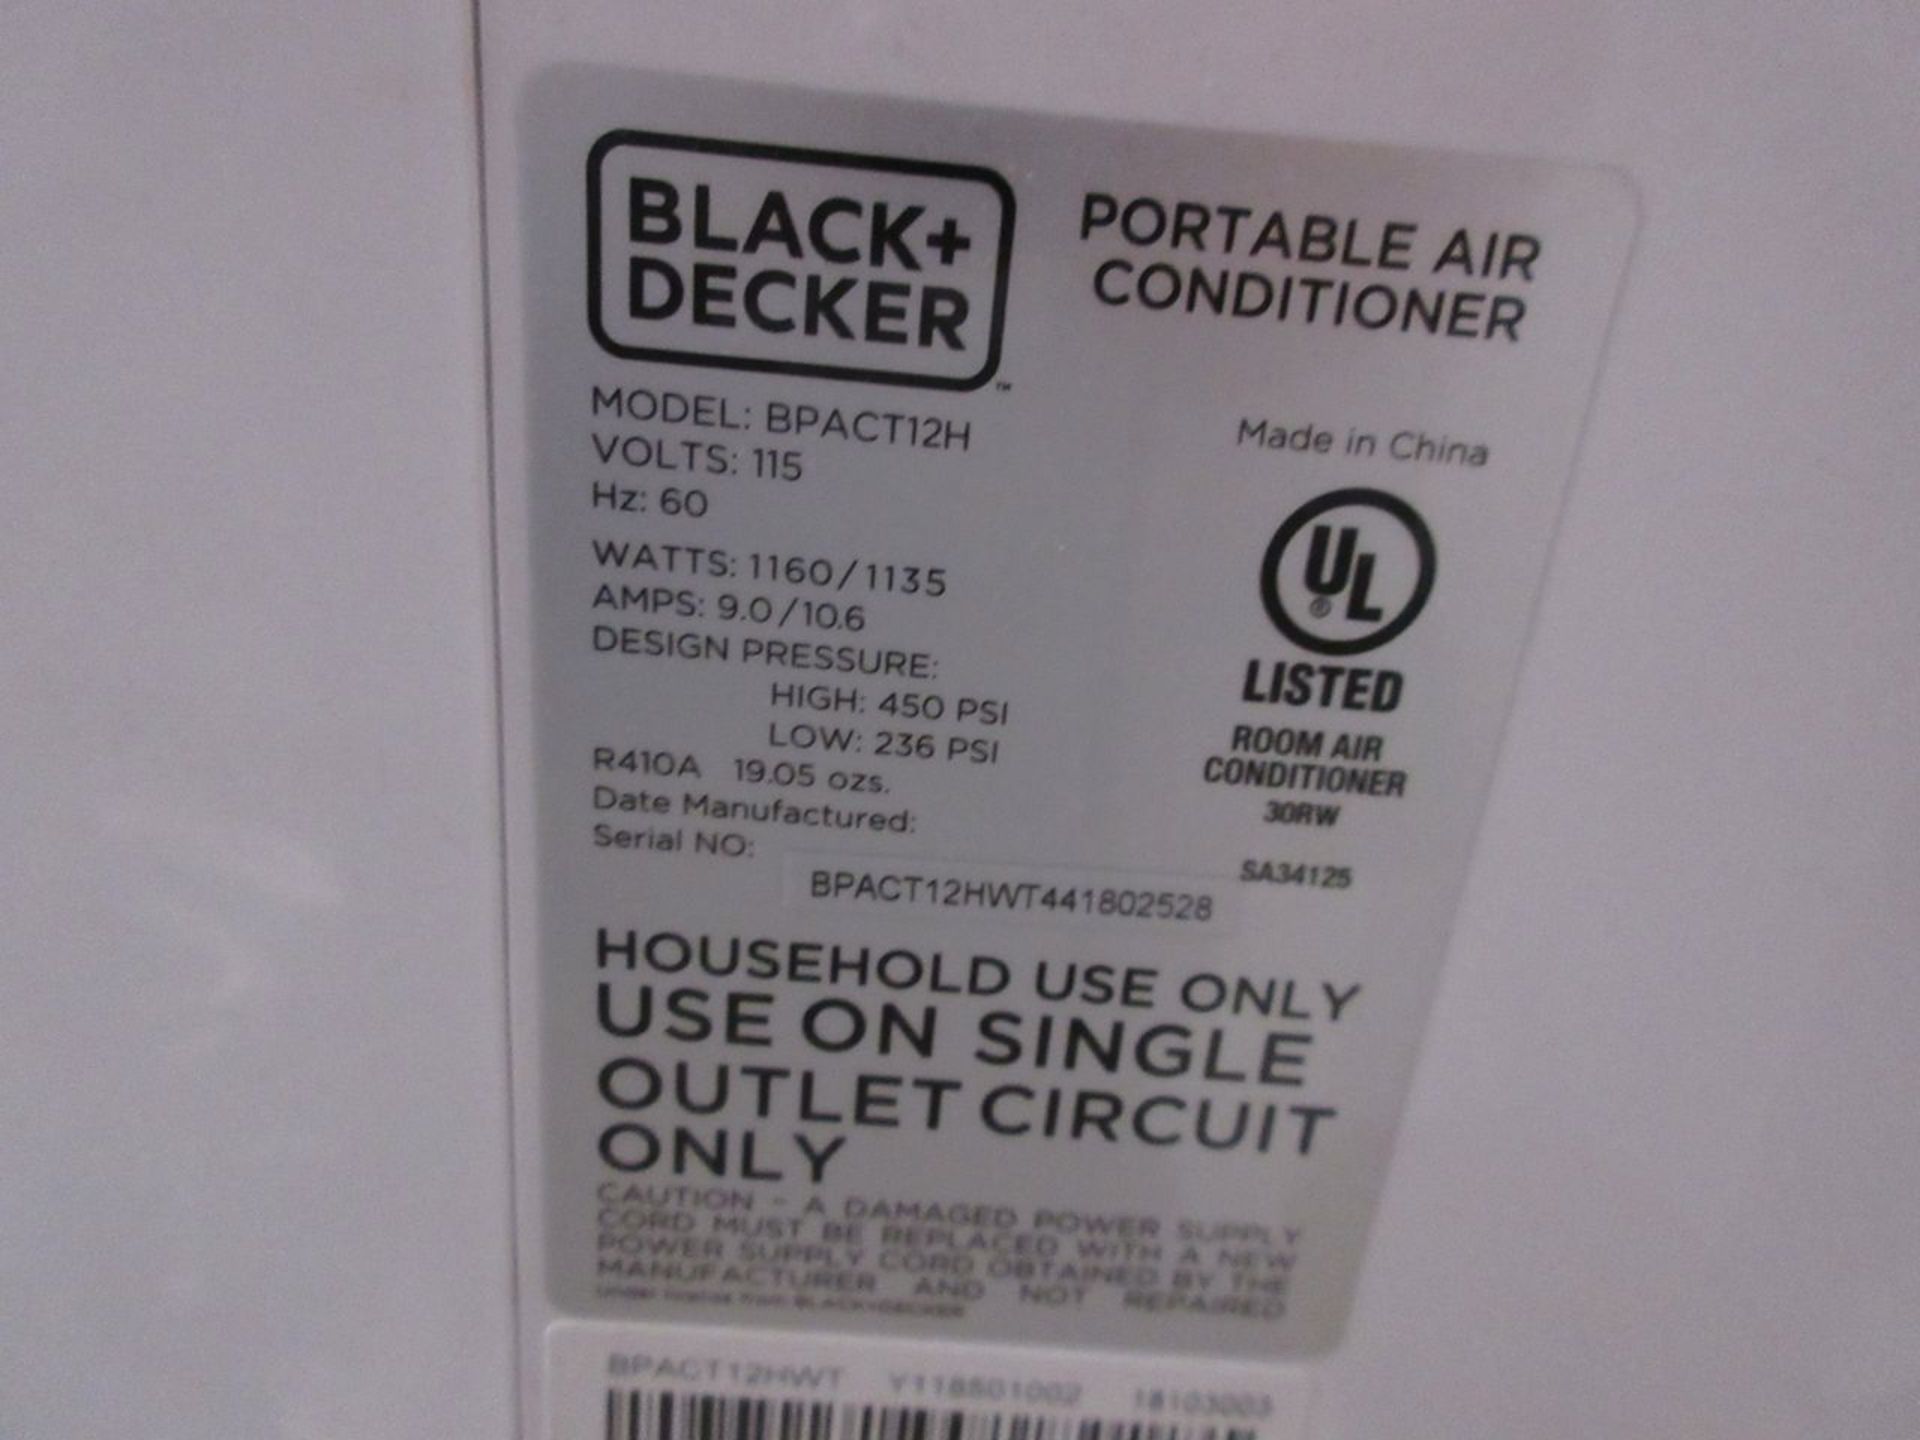 Black & Decker Model BPACT12H Portable Air Conditioner - Image 2 of 2